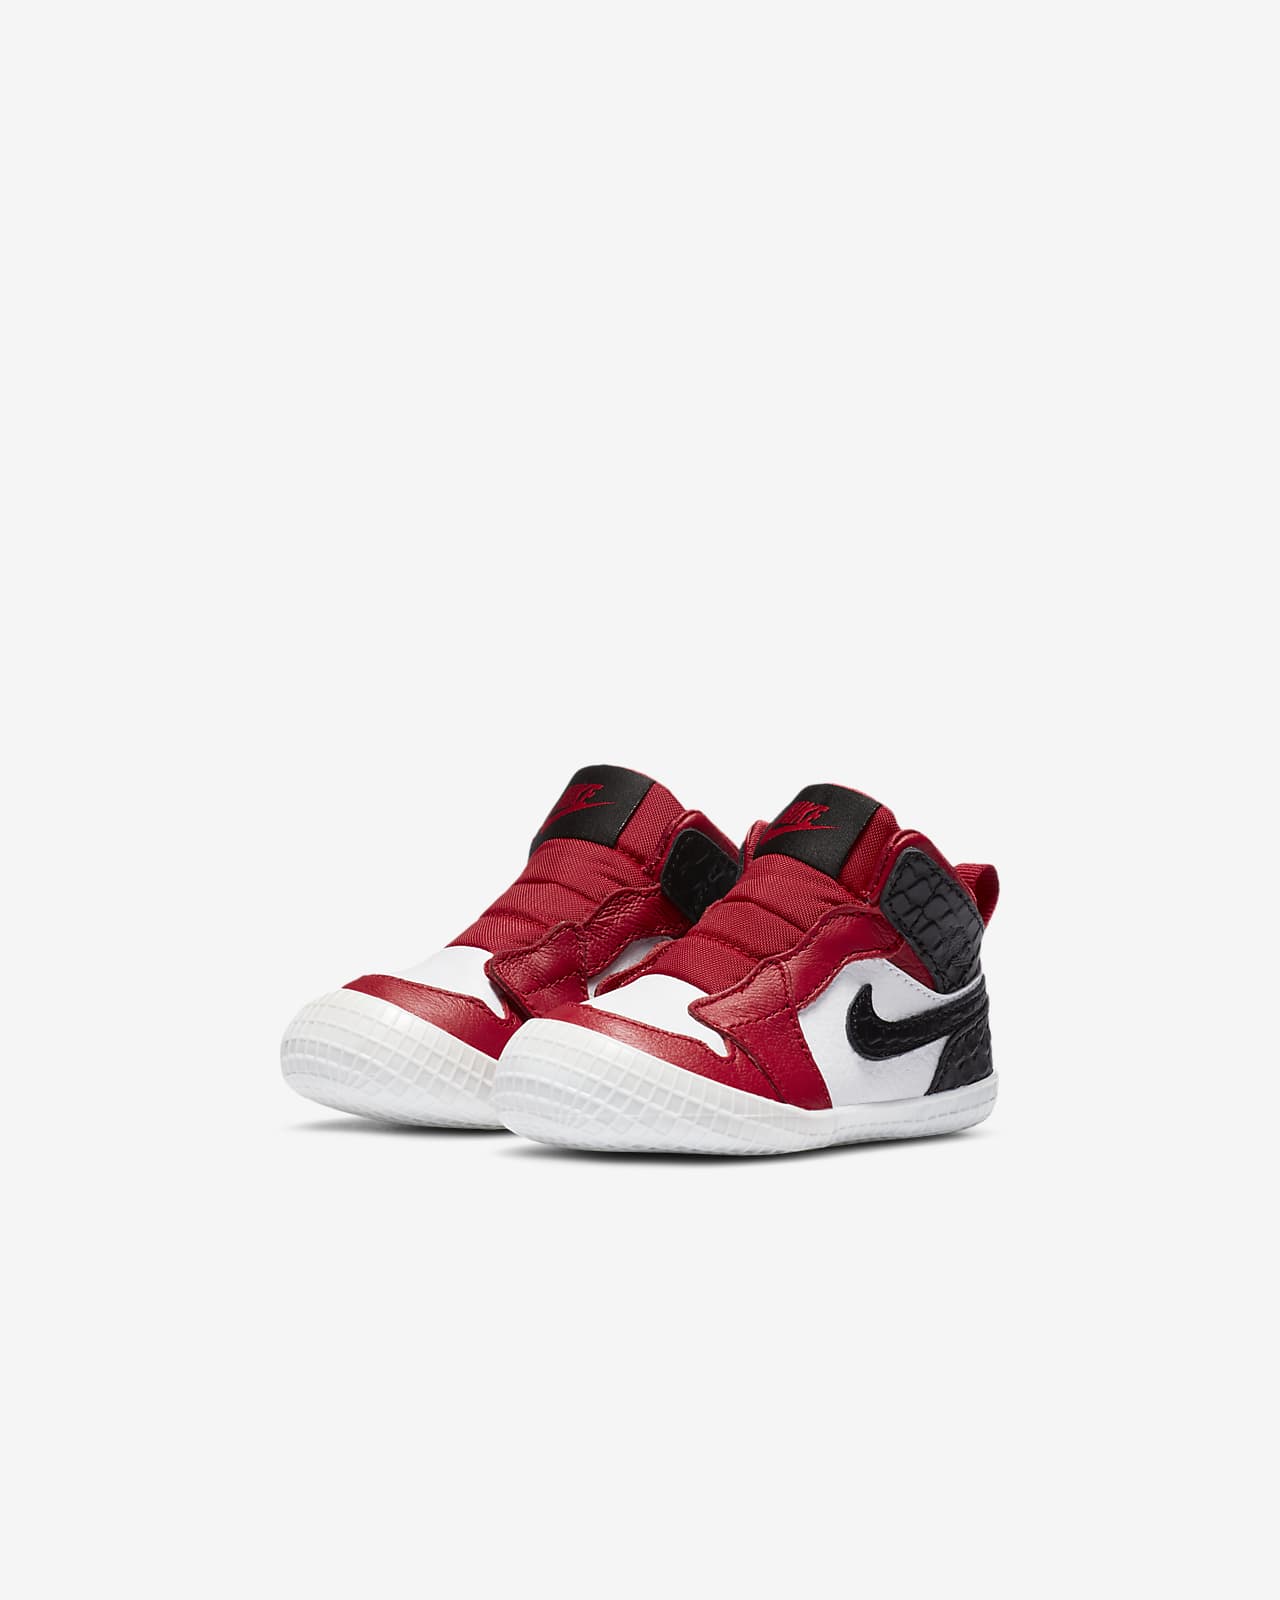 Jordan 1 Baby Cot Bootie. Nike NL